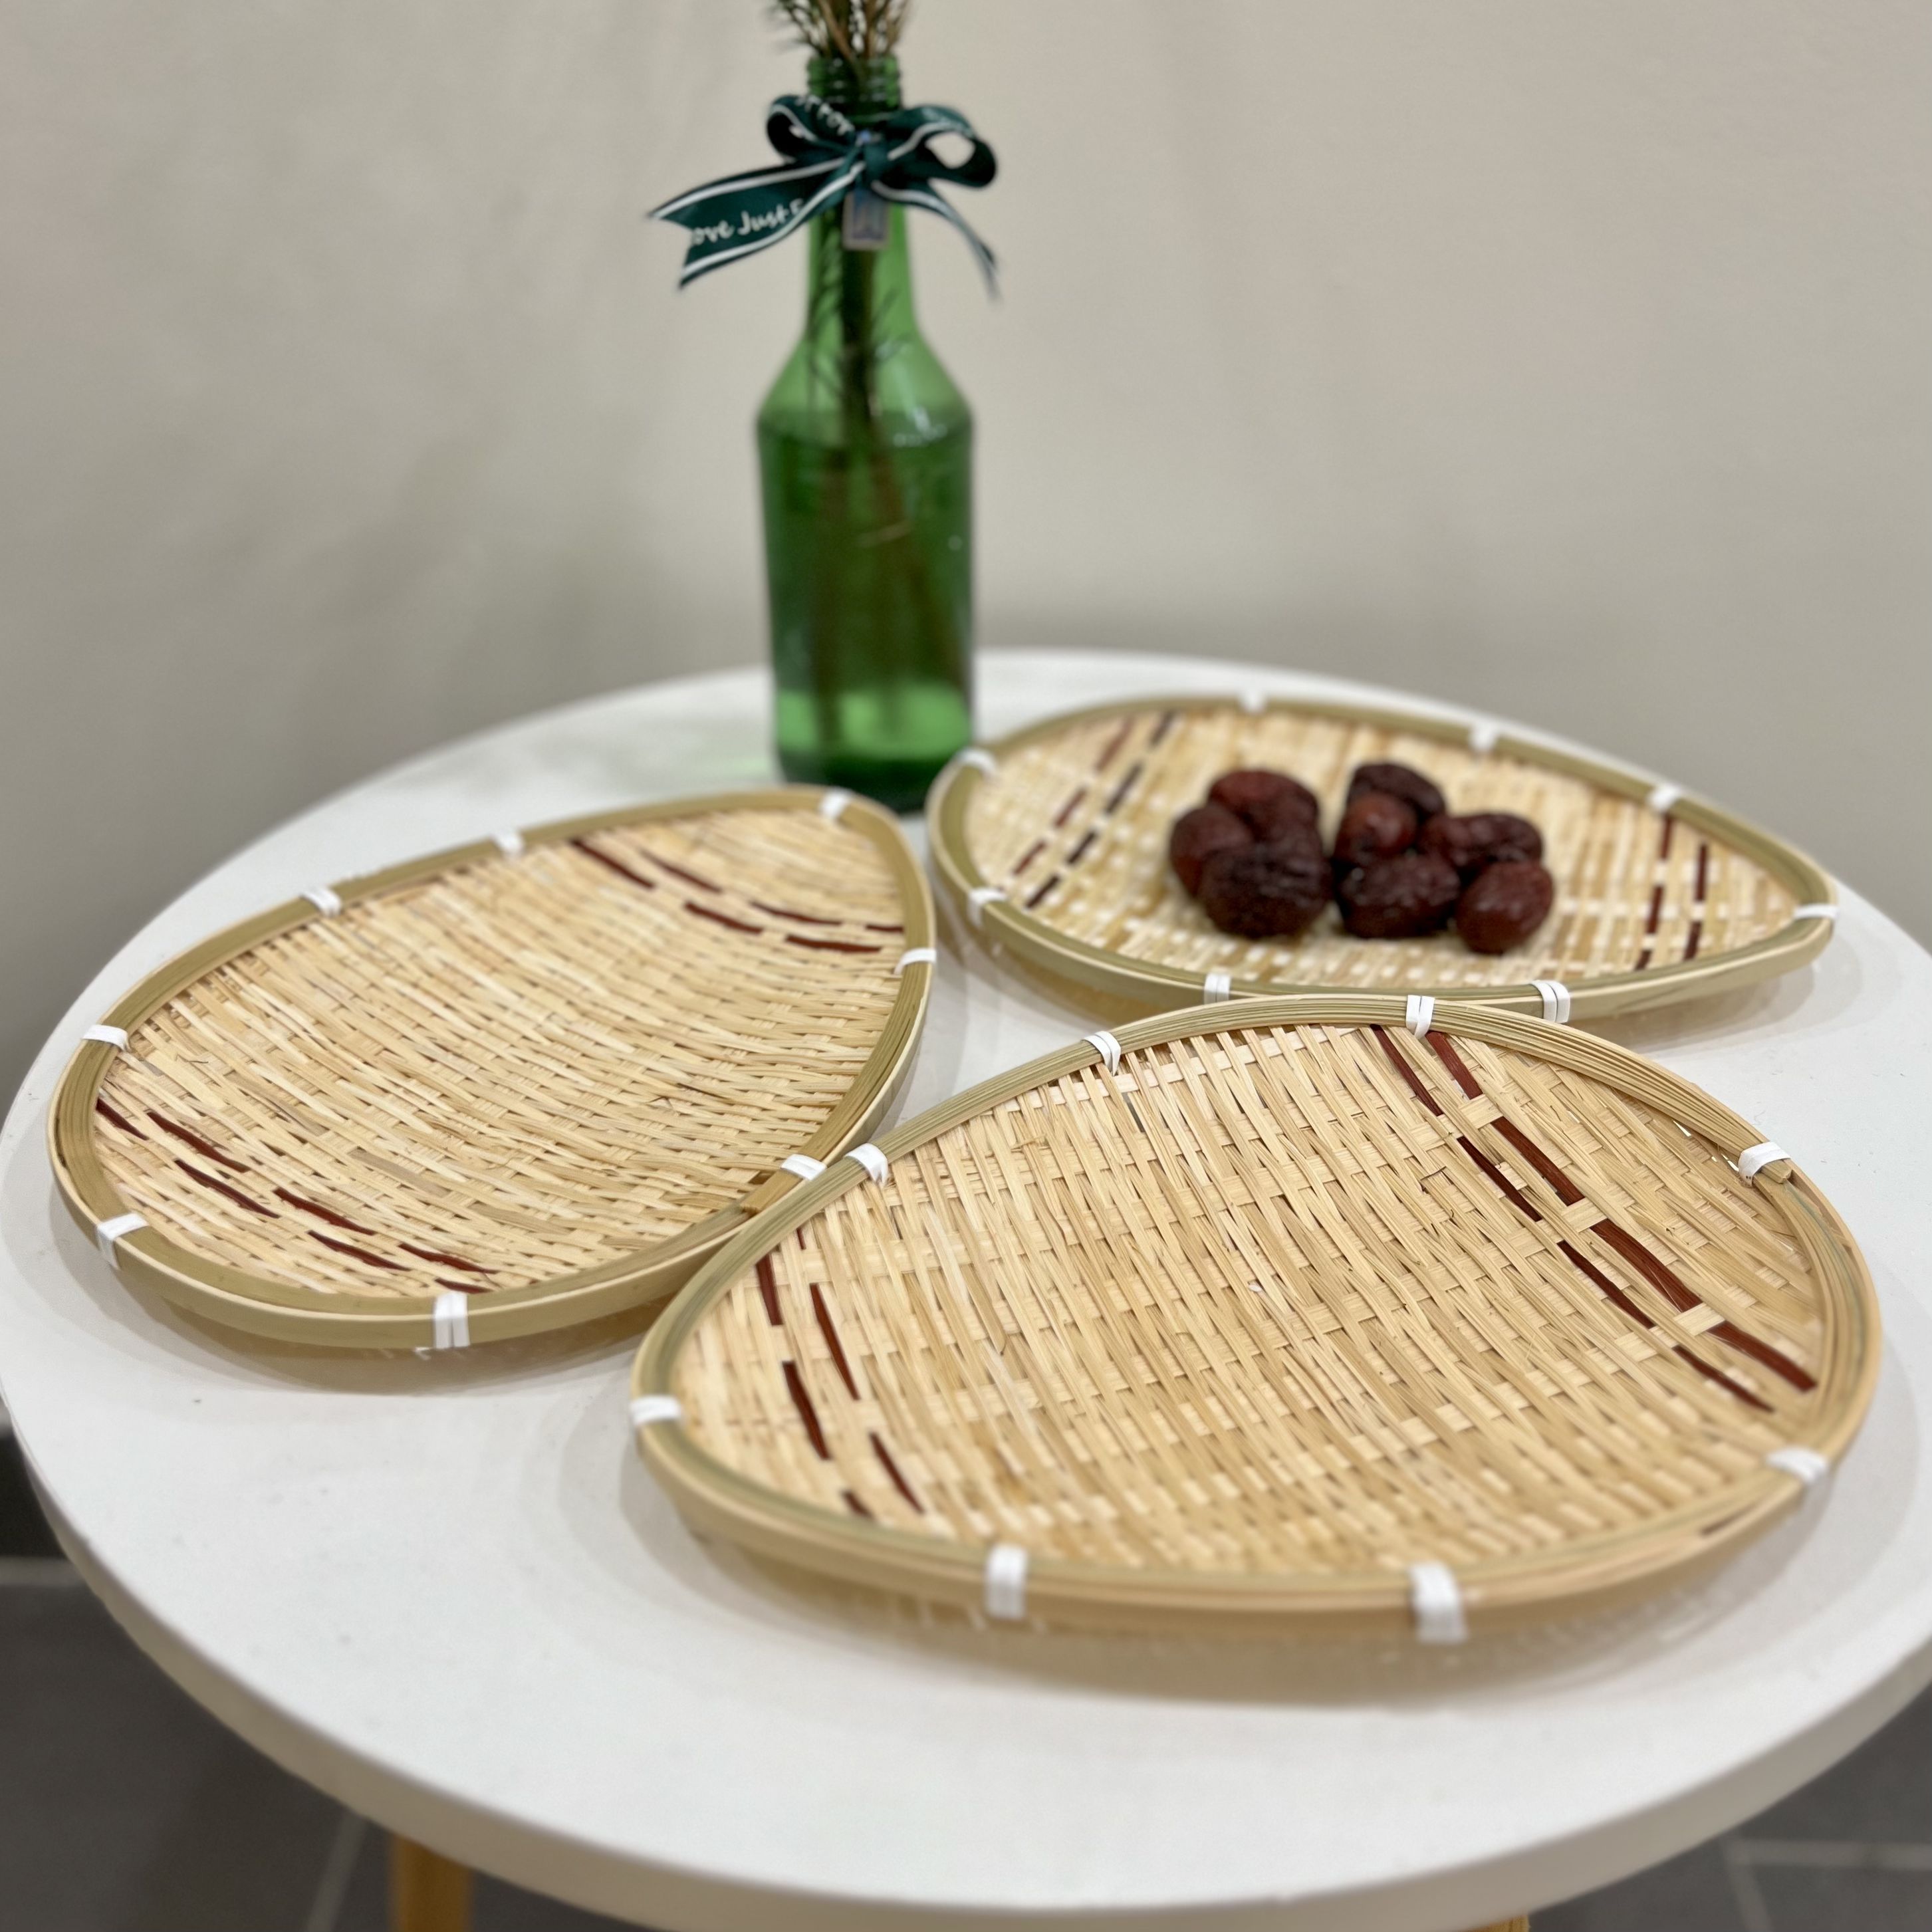 Khay Tre Trang Trí Decor Bánh Kẹo, Trái Cây Ur Space/ Bamboo Woven Basket Tray For Breakfast, Drinks, Snacks